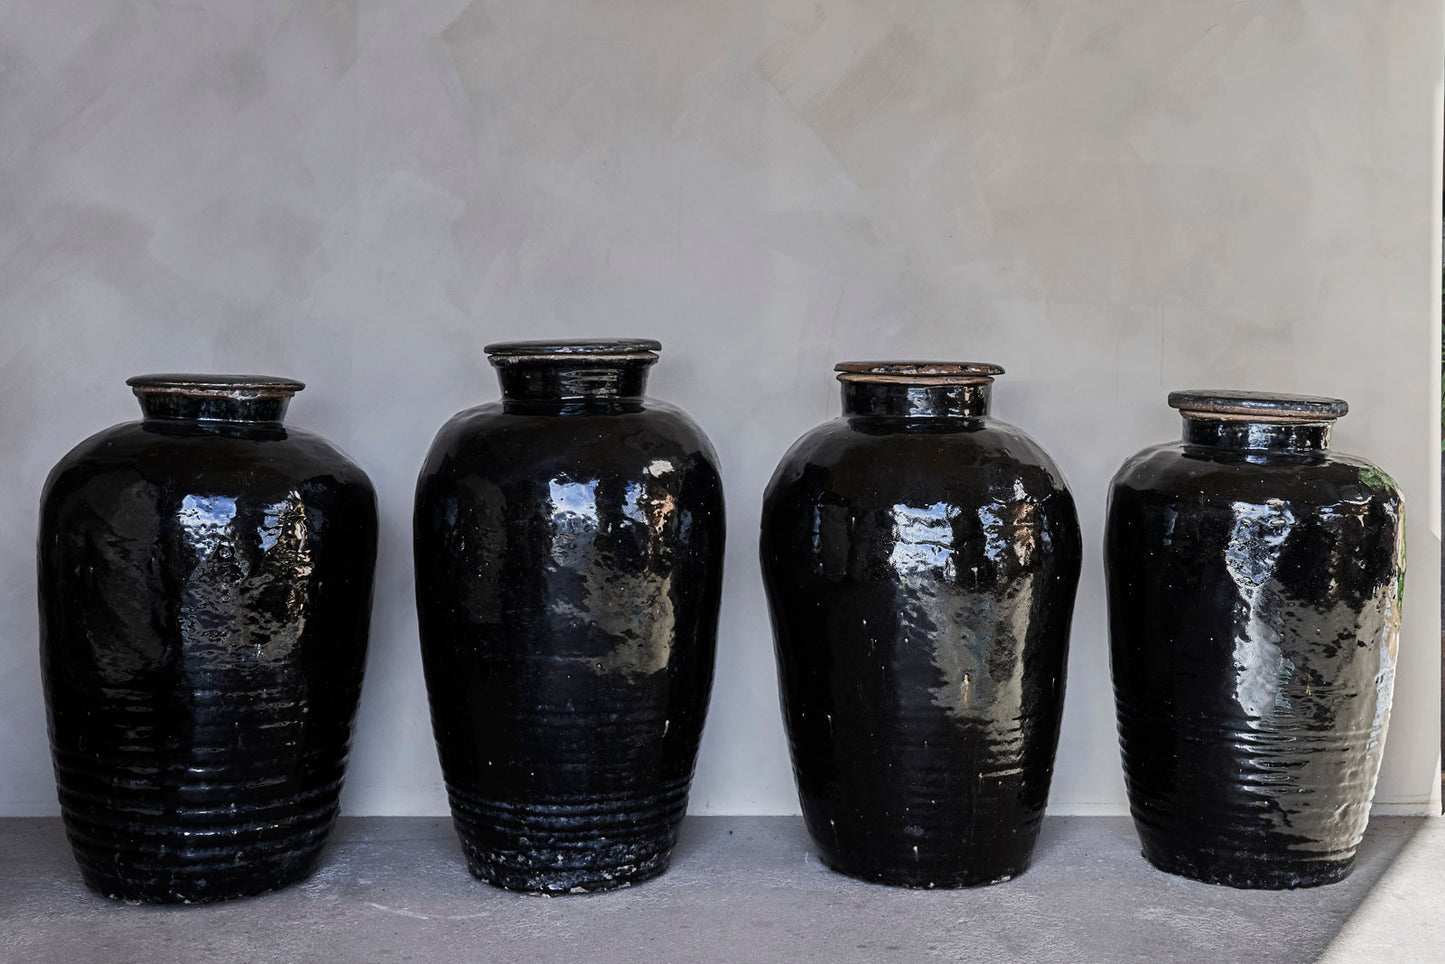 Antique Black Shanxi Pots